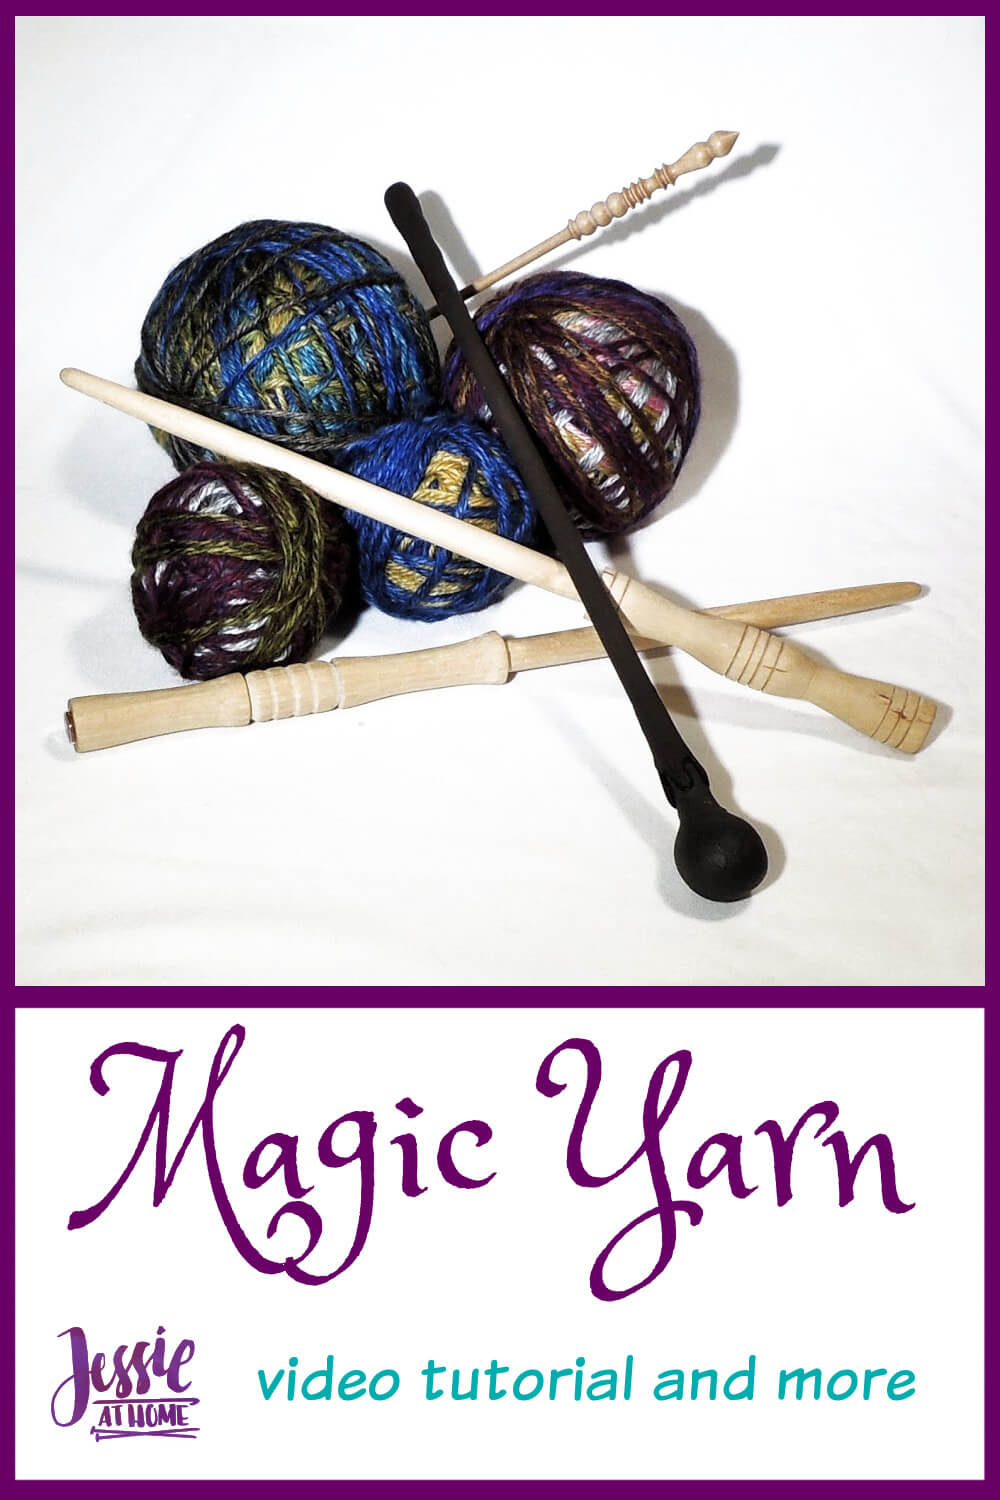 Magic Yarn: video tutorial and more